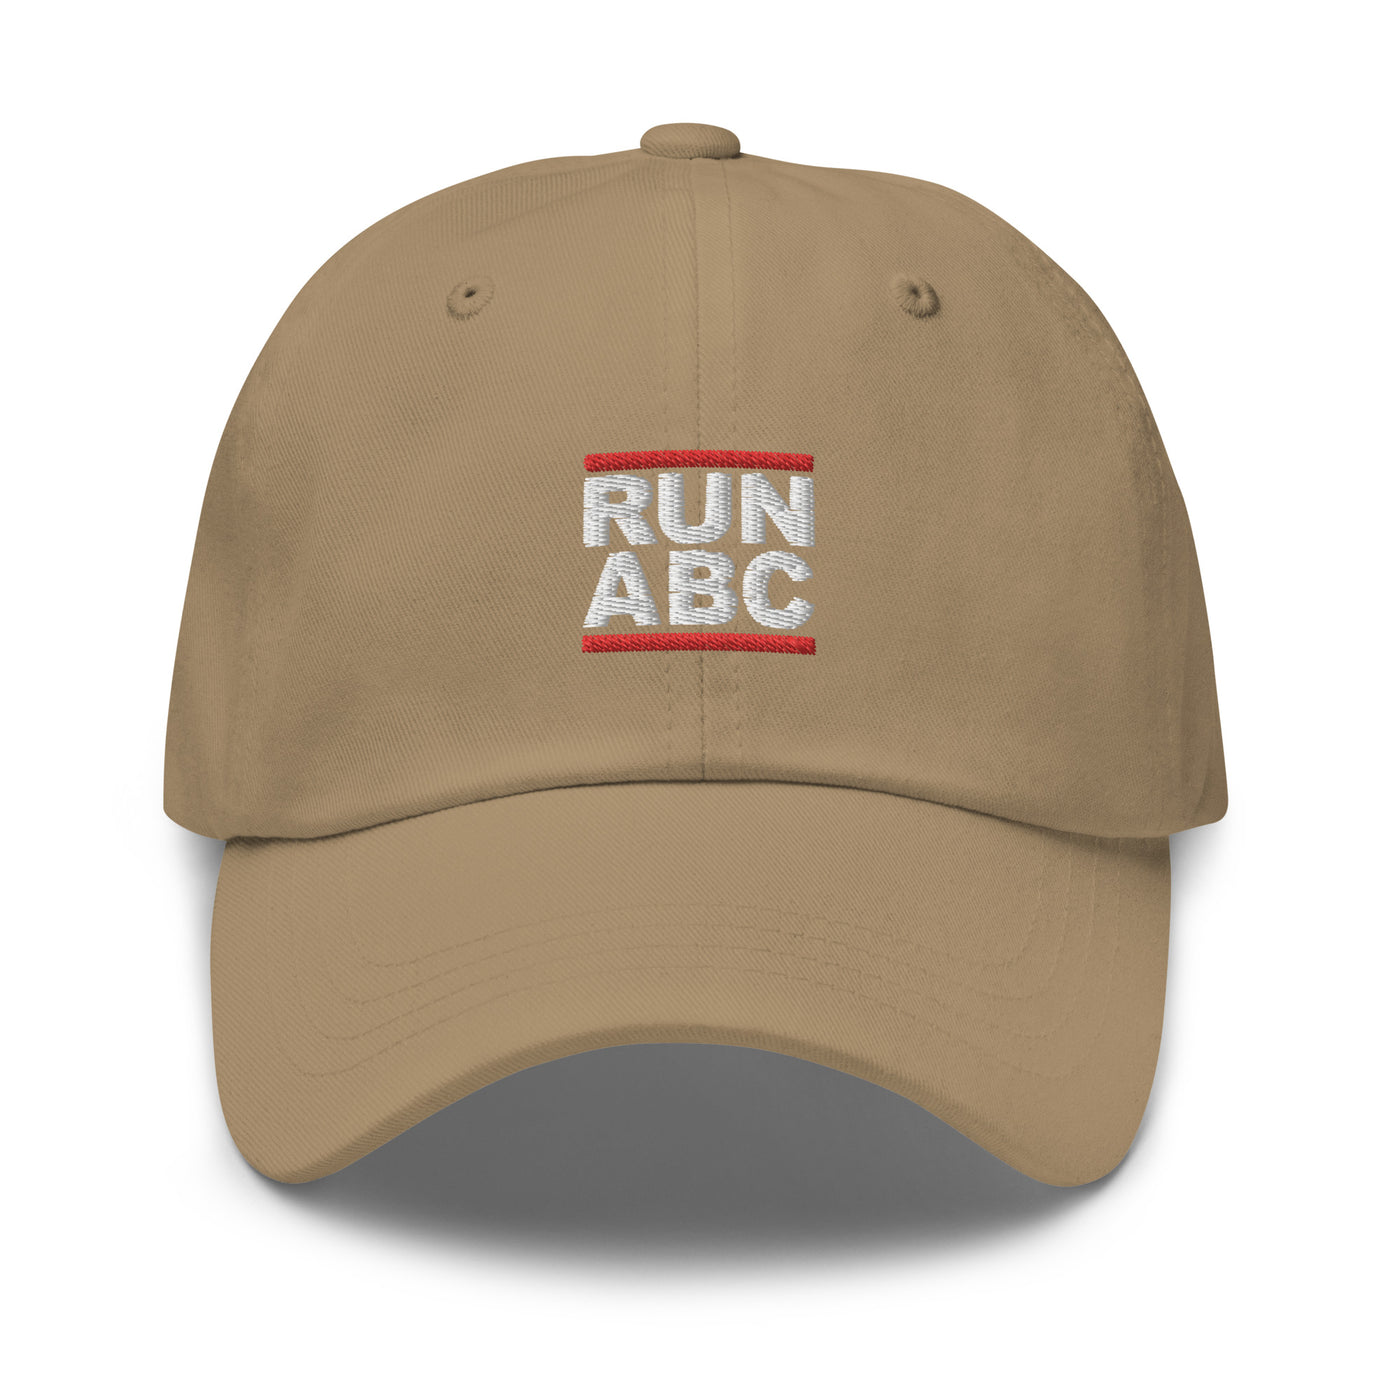 RUN ABC unisex hat